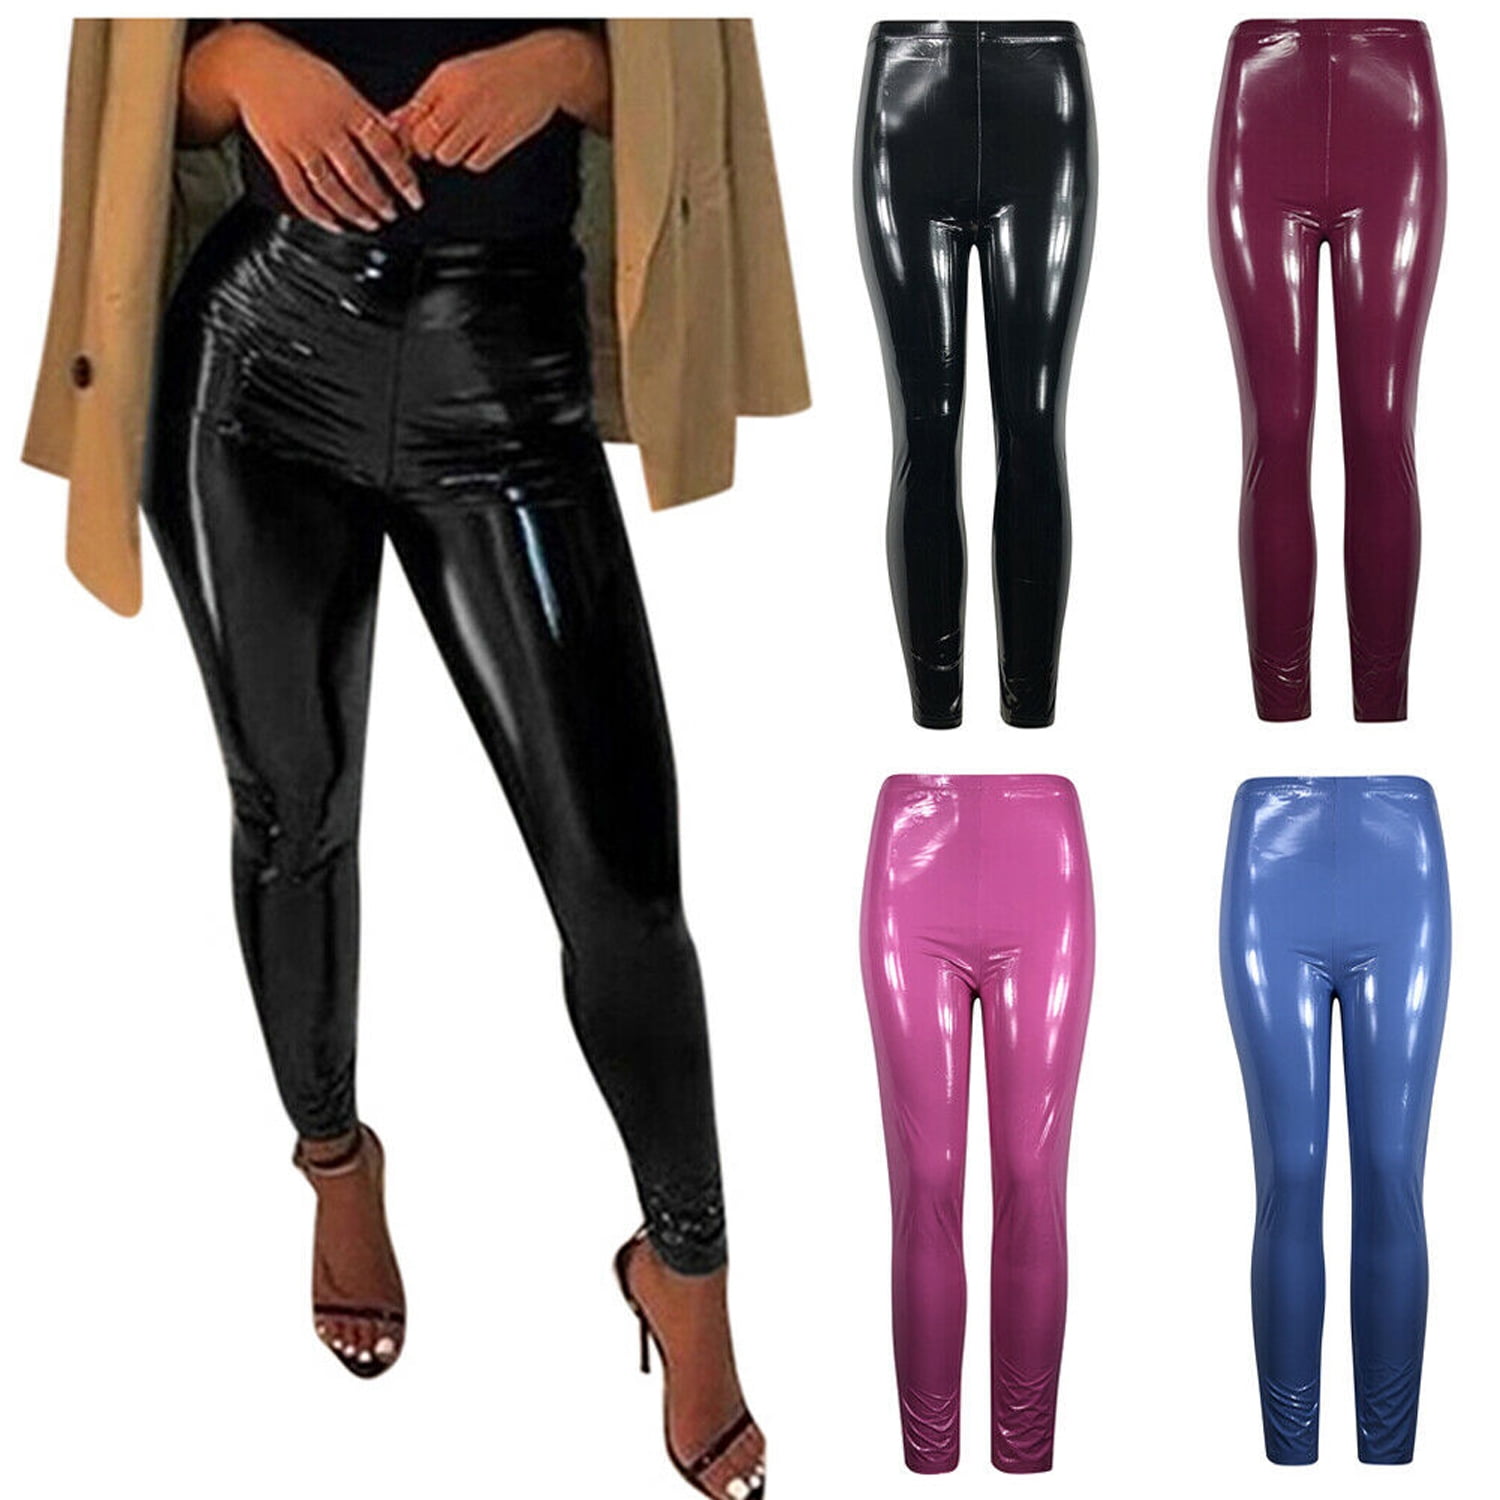 Women/'s Fashion PU Leather High Waist Slim Pants Stretchy Trousers Leggings US